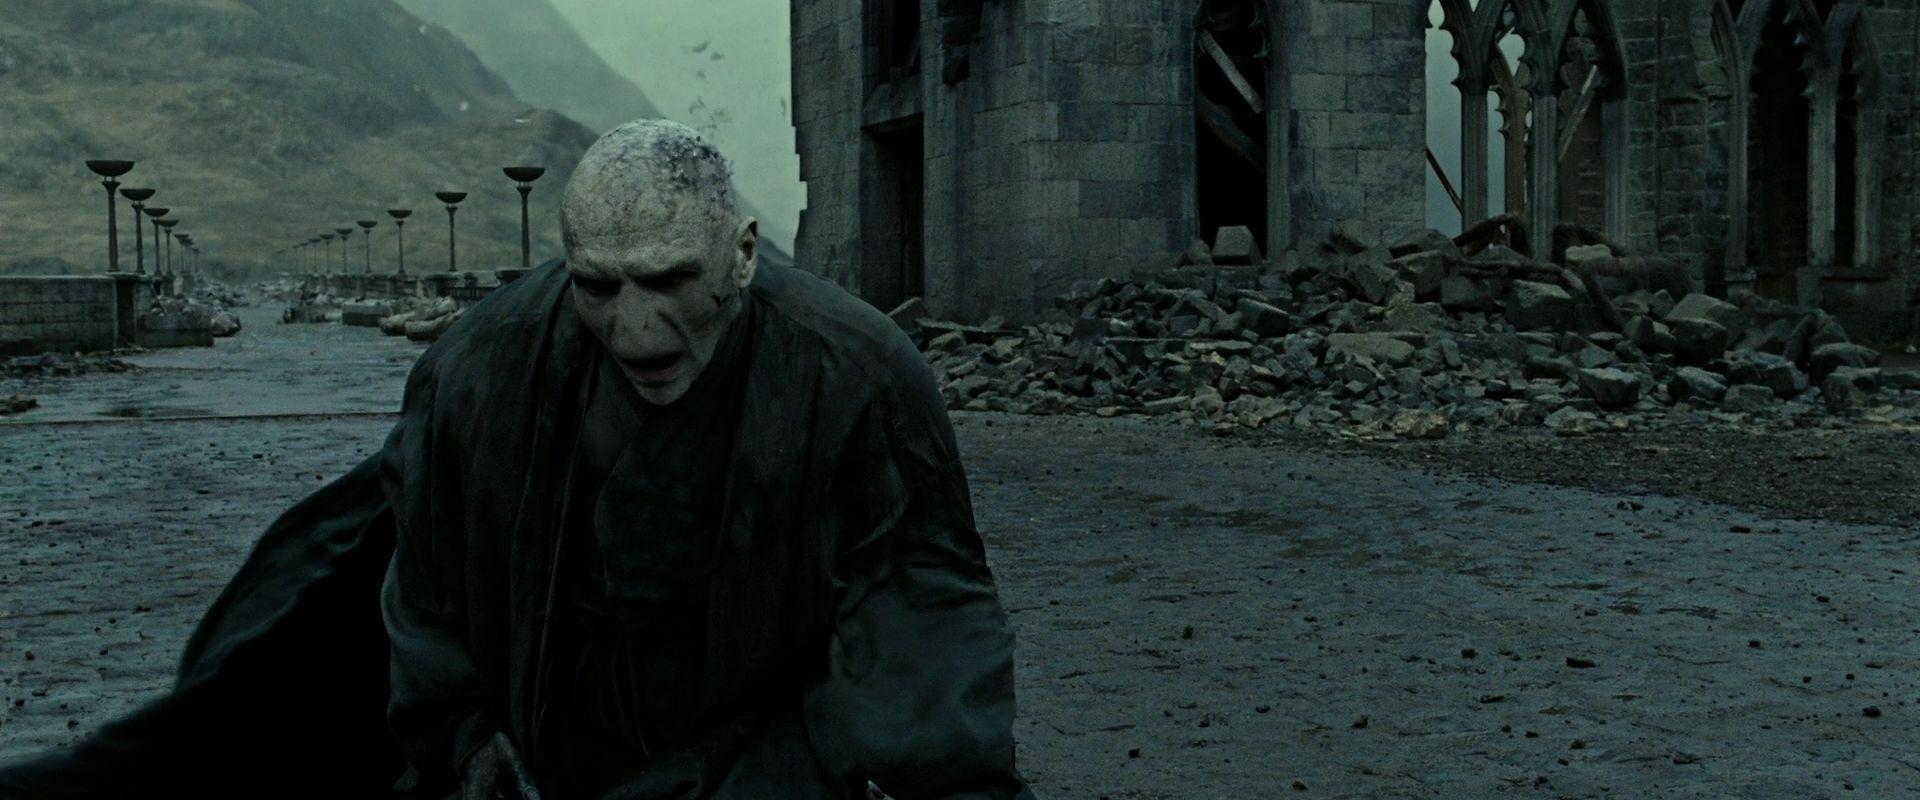 Lord Voldemort Costume Ideas